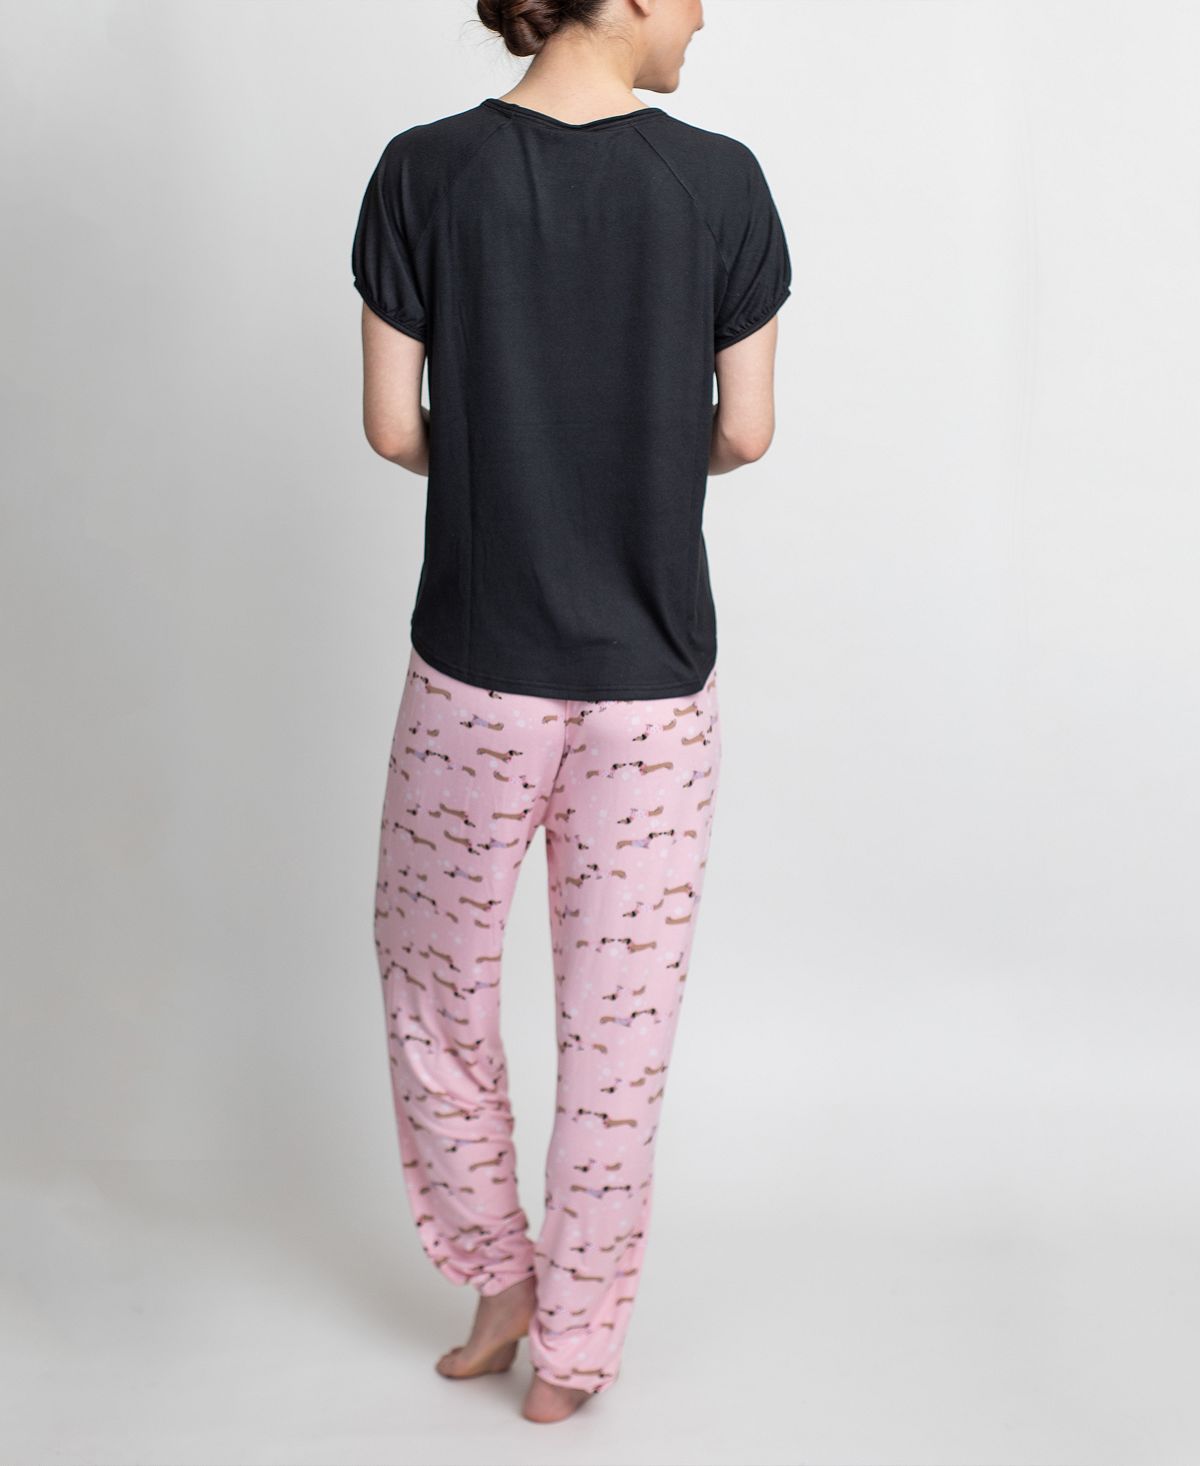 Muk Luks T-shirt & Printed Pants Pajama Set Black And Dogs